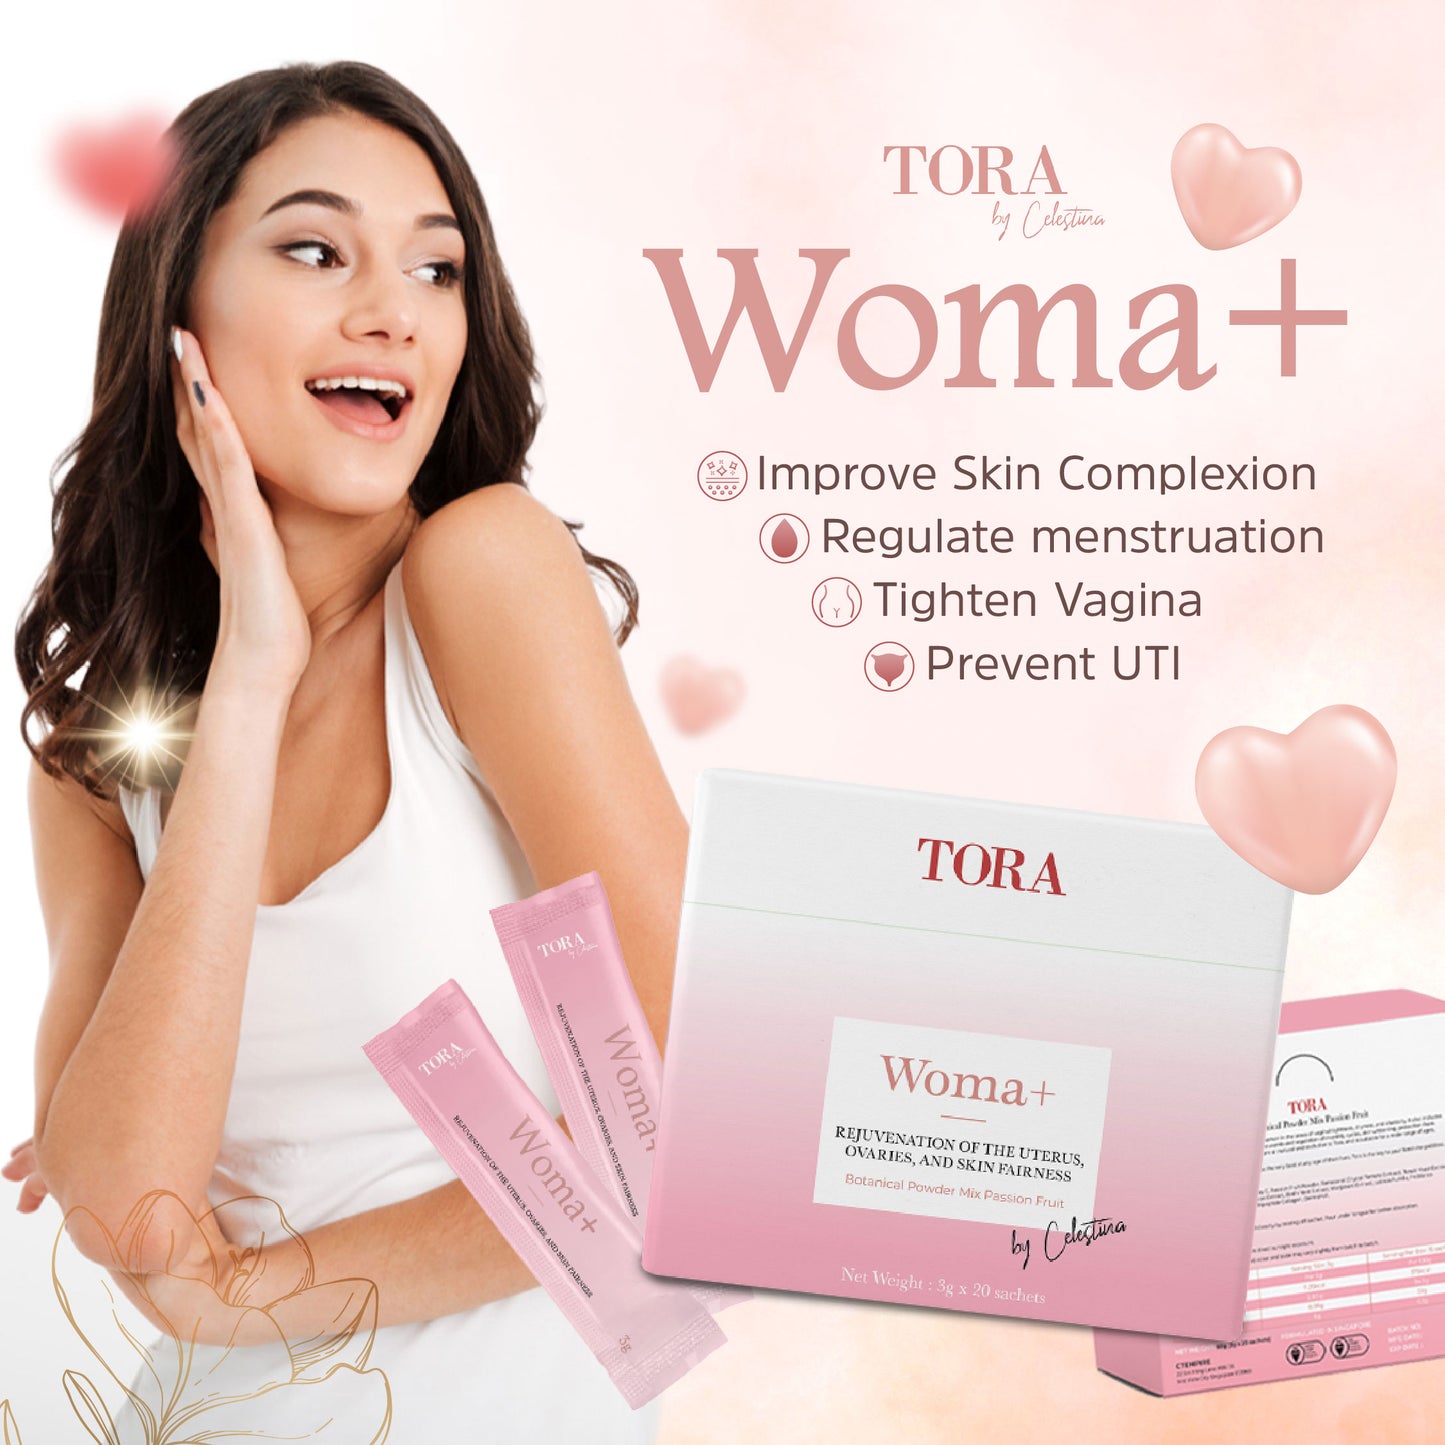 TORA Woma+